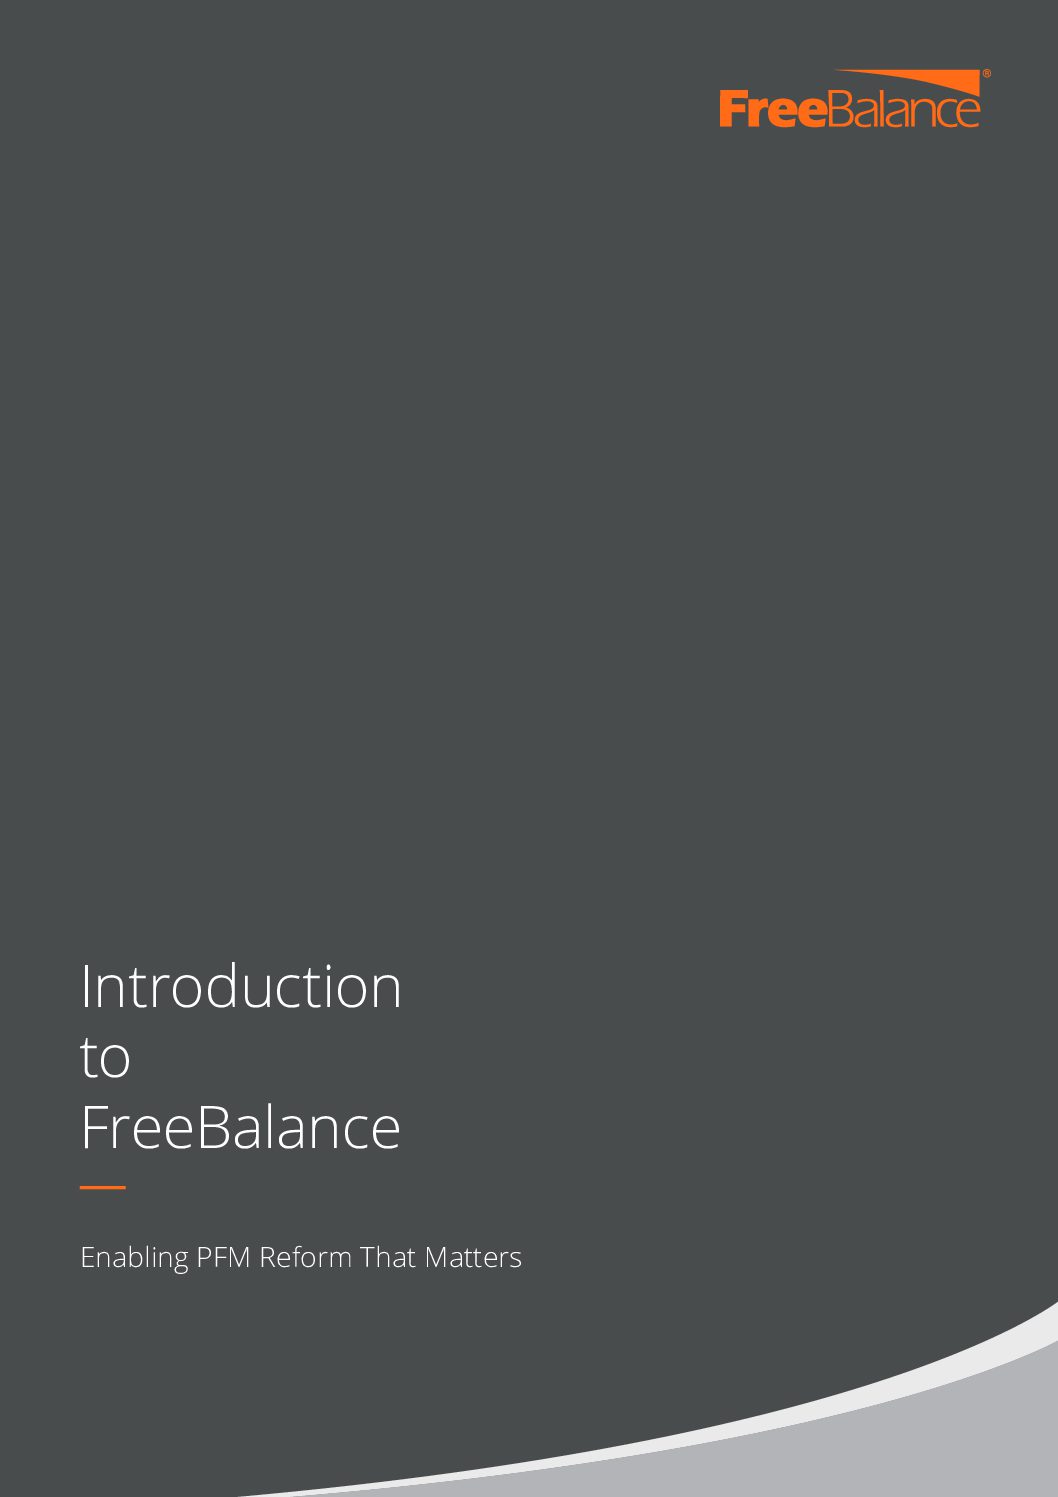 FreeBalance Overview Brochure